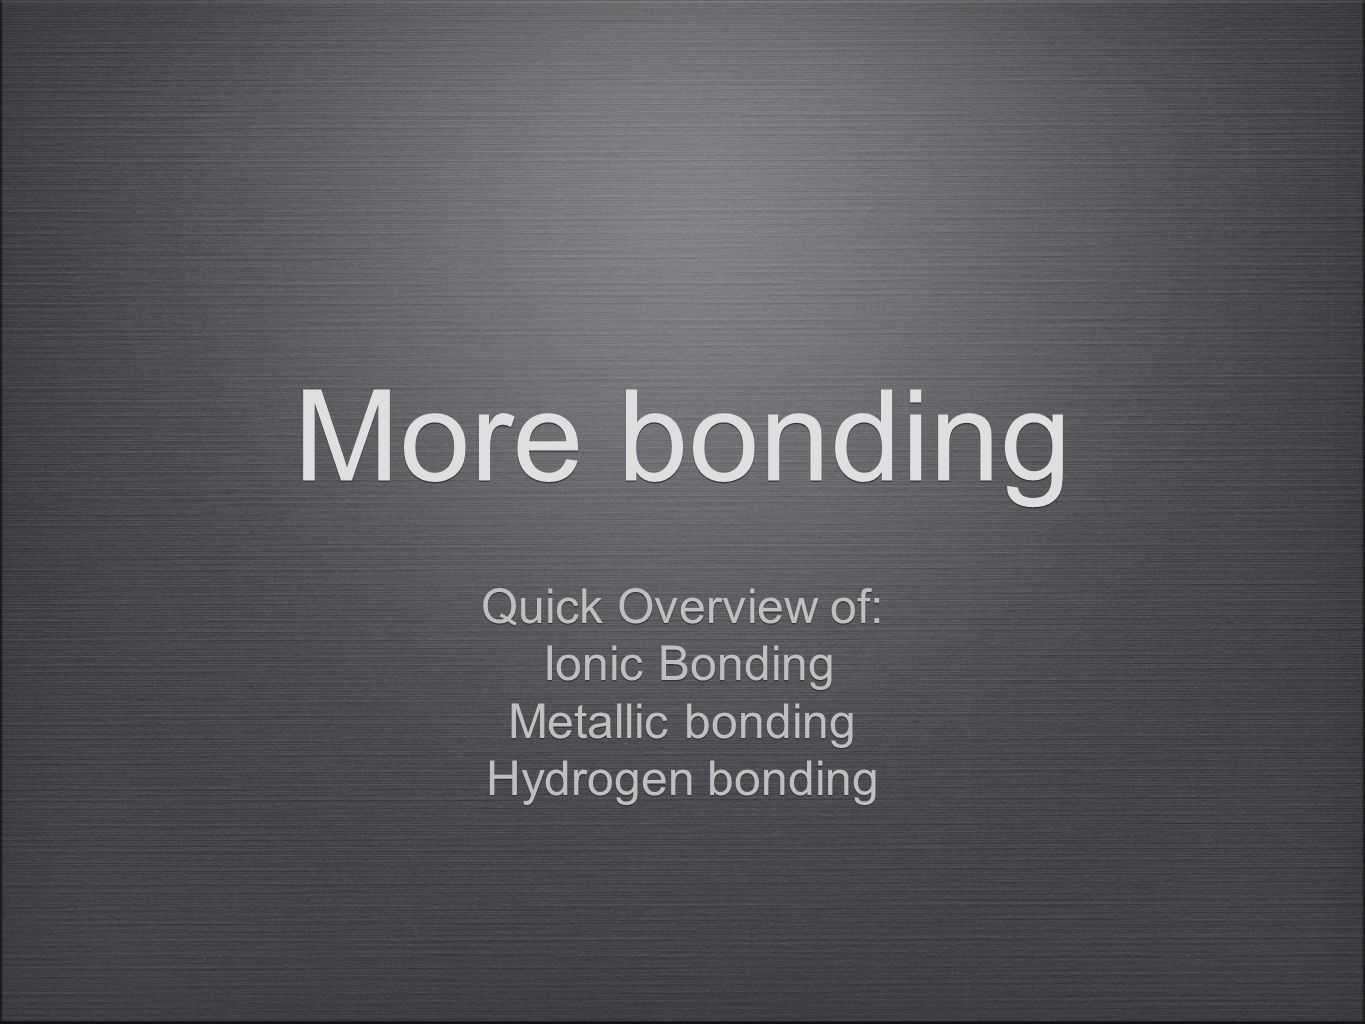 More bonding Quick Overview of: Ionic Bonding Metallic bonding Hydrogen bonding Quick Overview of: Ionic Bonding Metallic bonding Hydrogen bonding